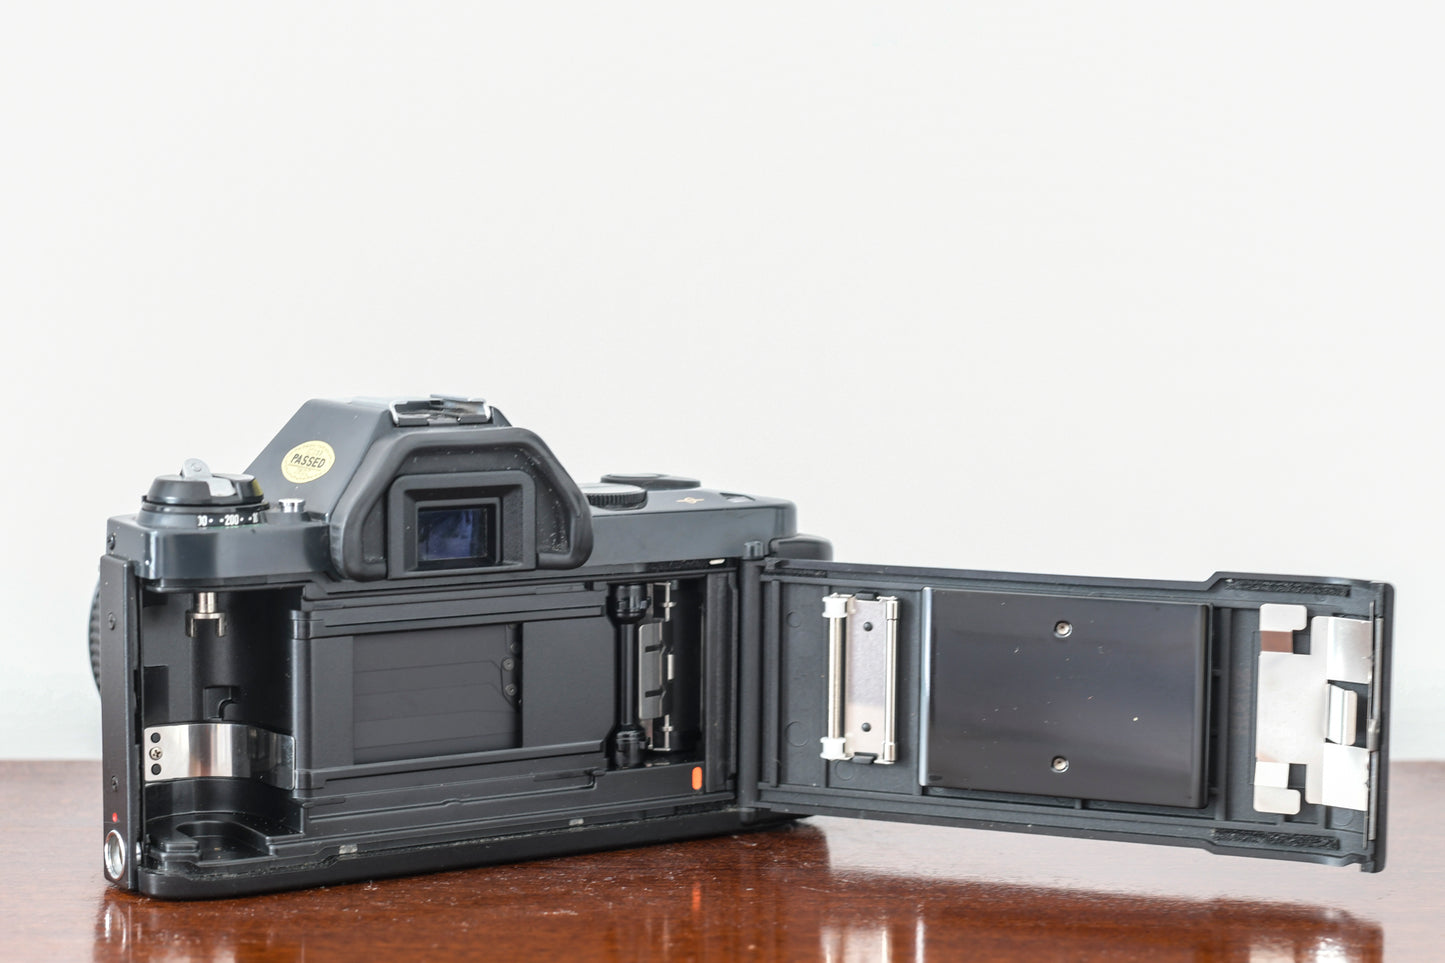 Canon T50 35mm SLR Film Camera with Komura 28mm F2.8 Lens